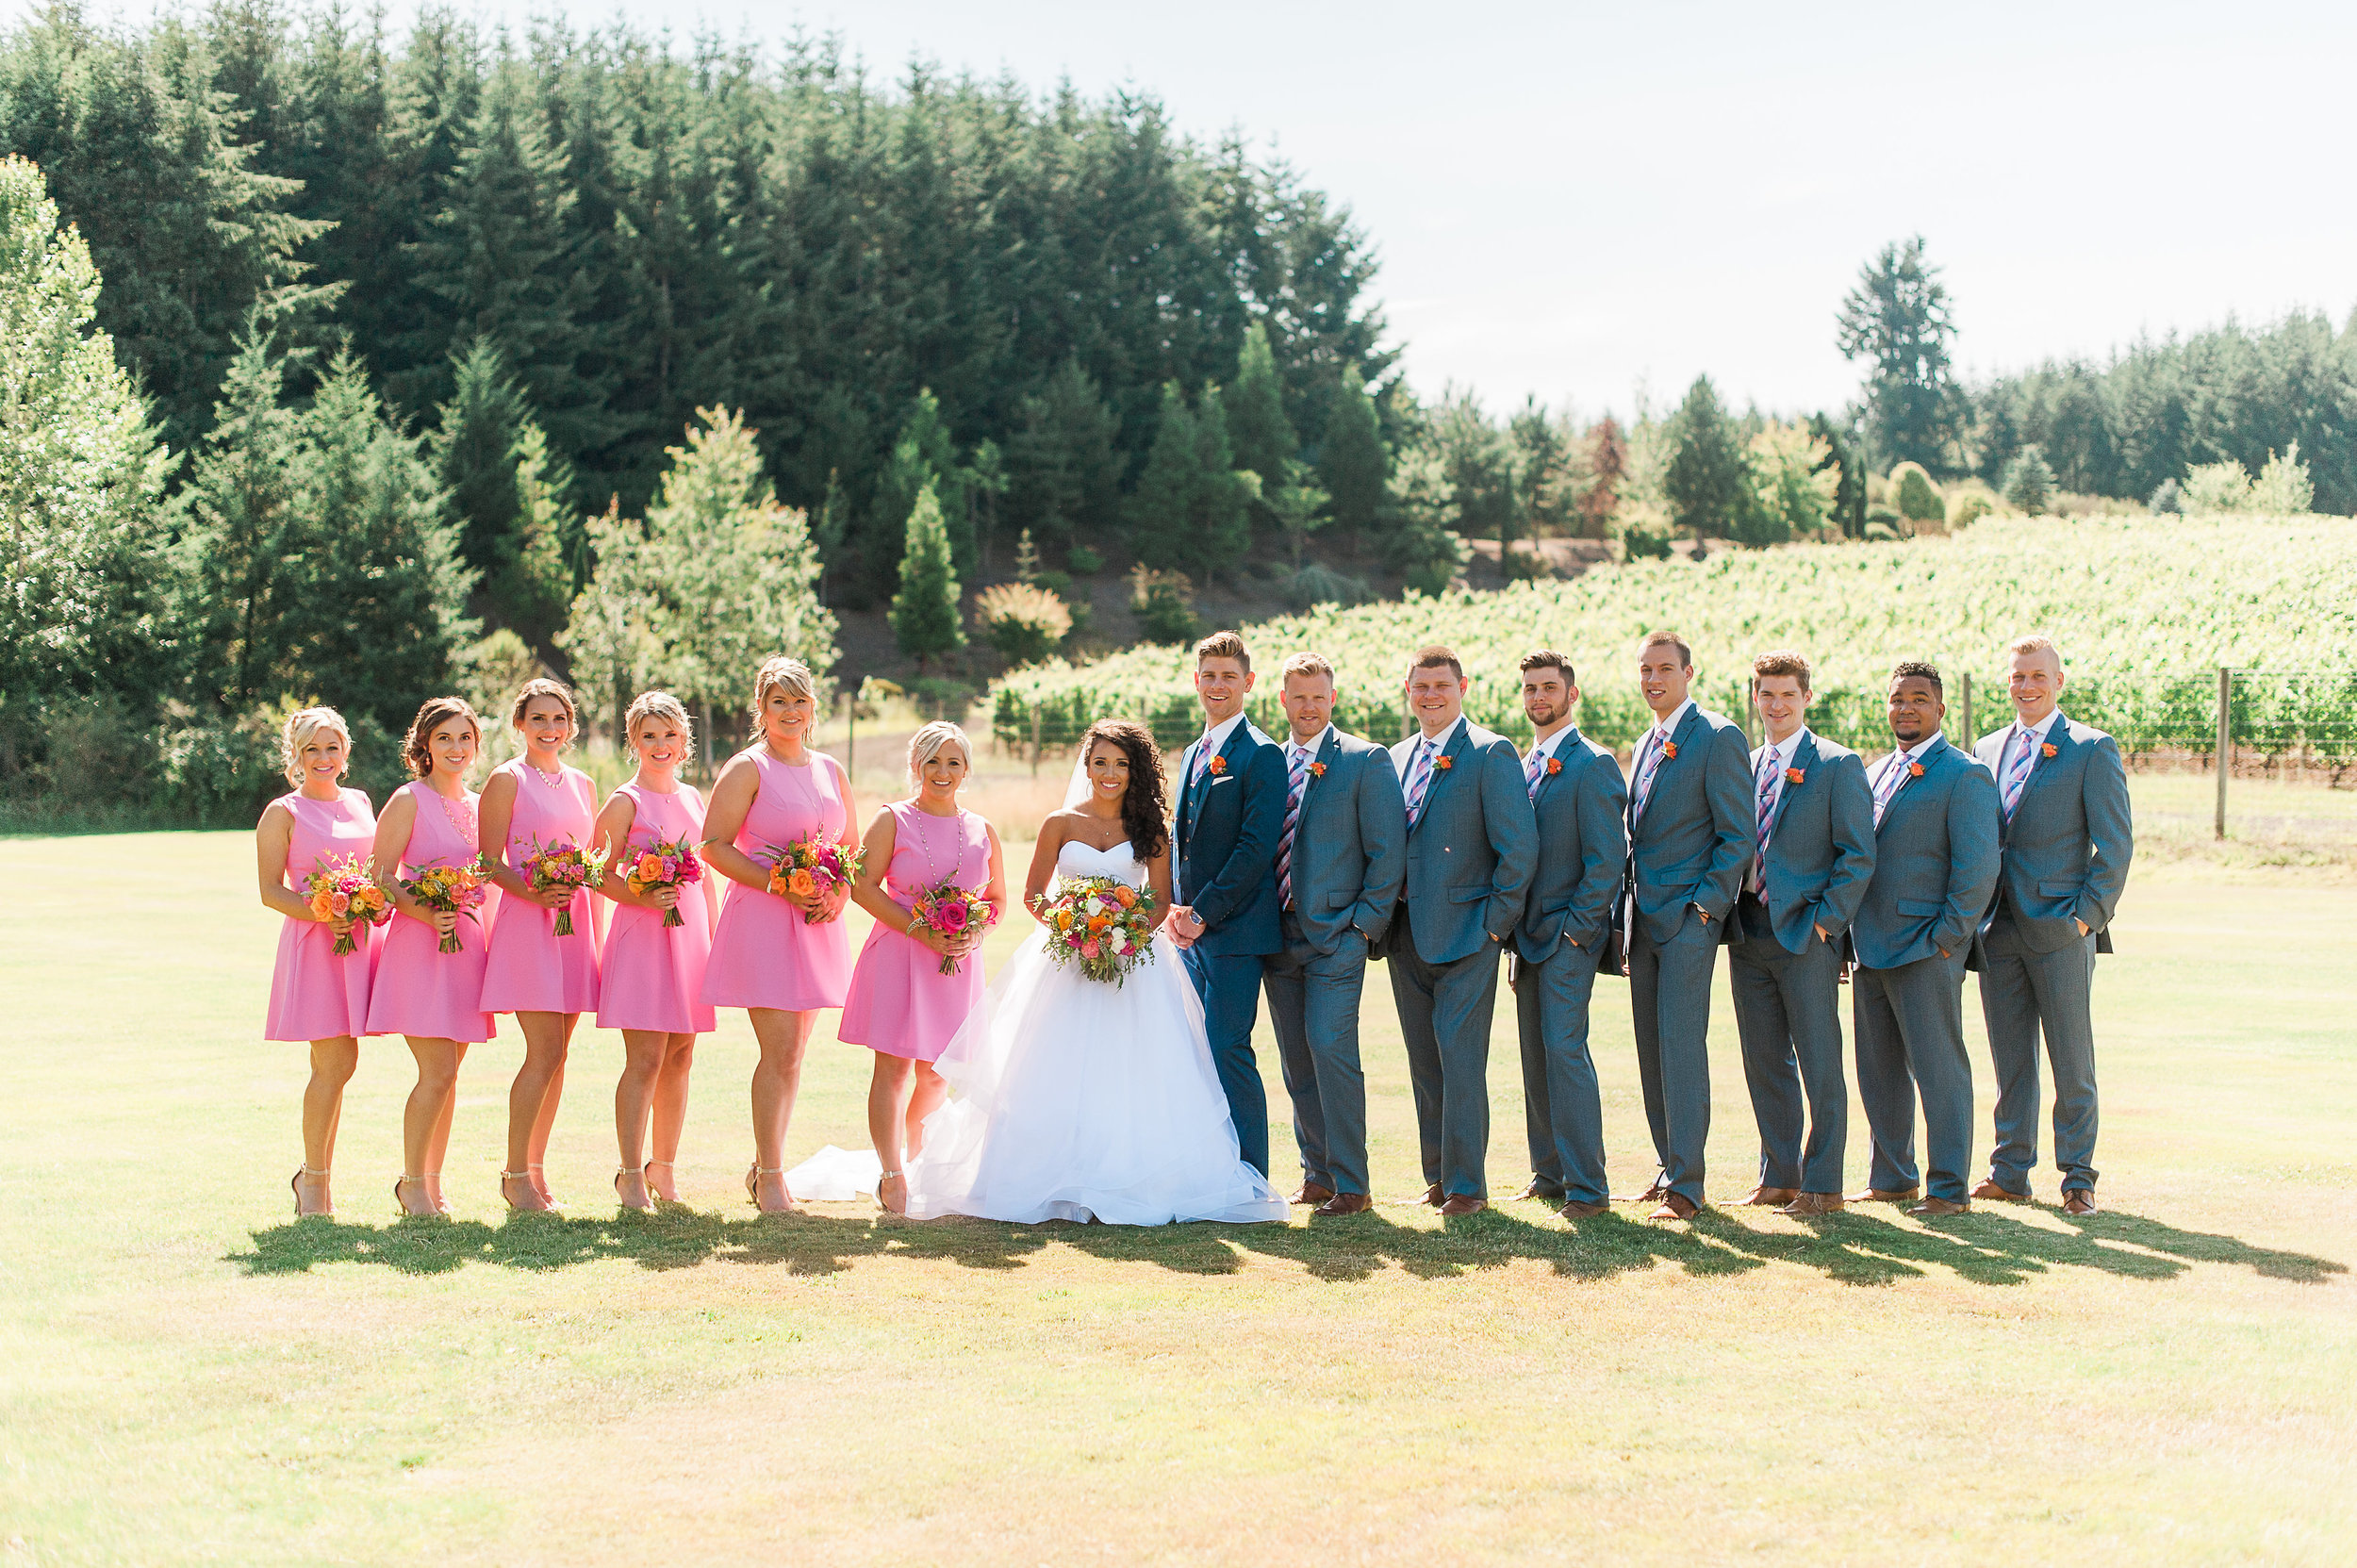 Bridalbliss.com | Portland Wedding | Oregon Event Planning and Design | Jane & Co Photography